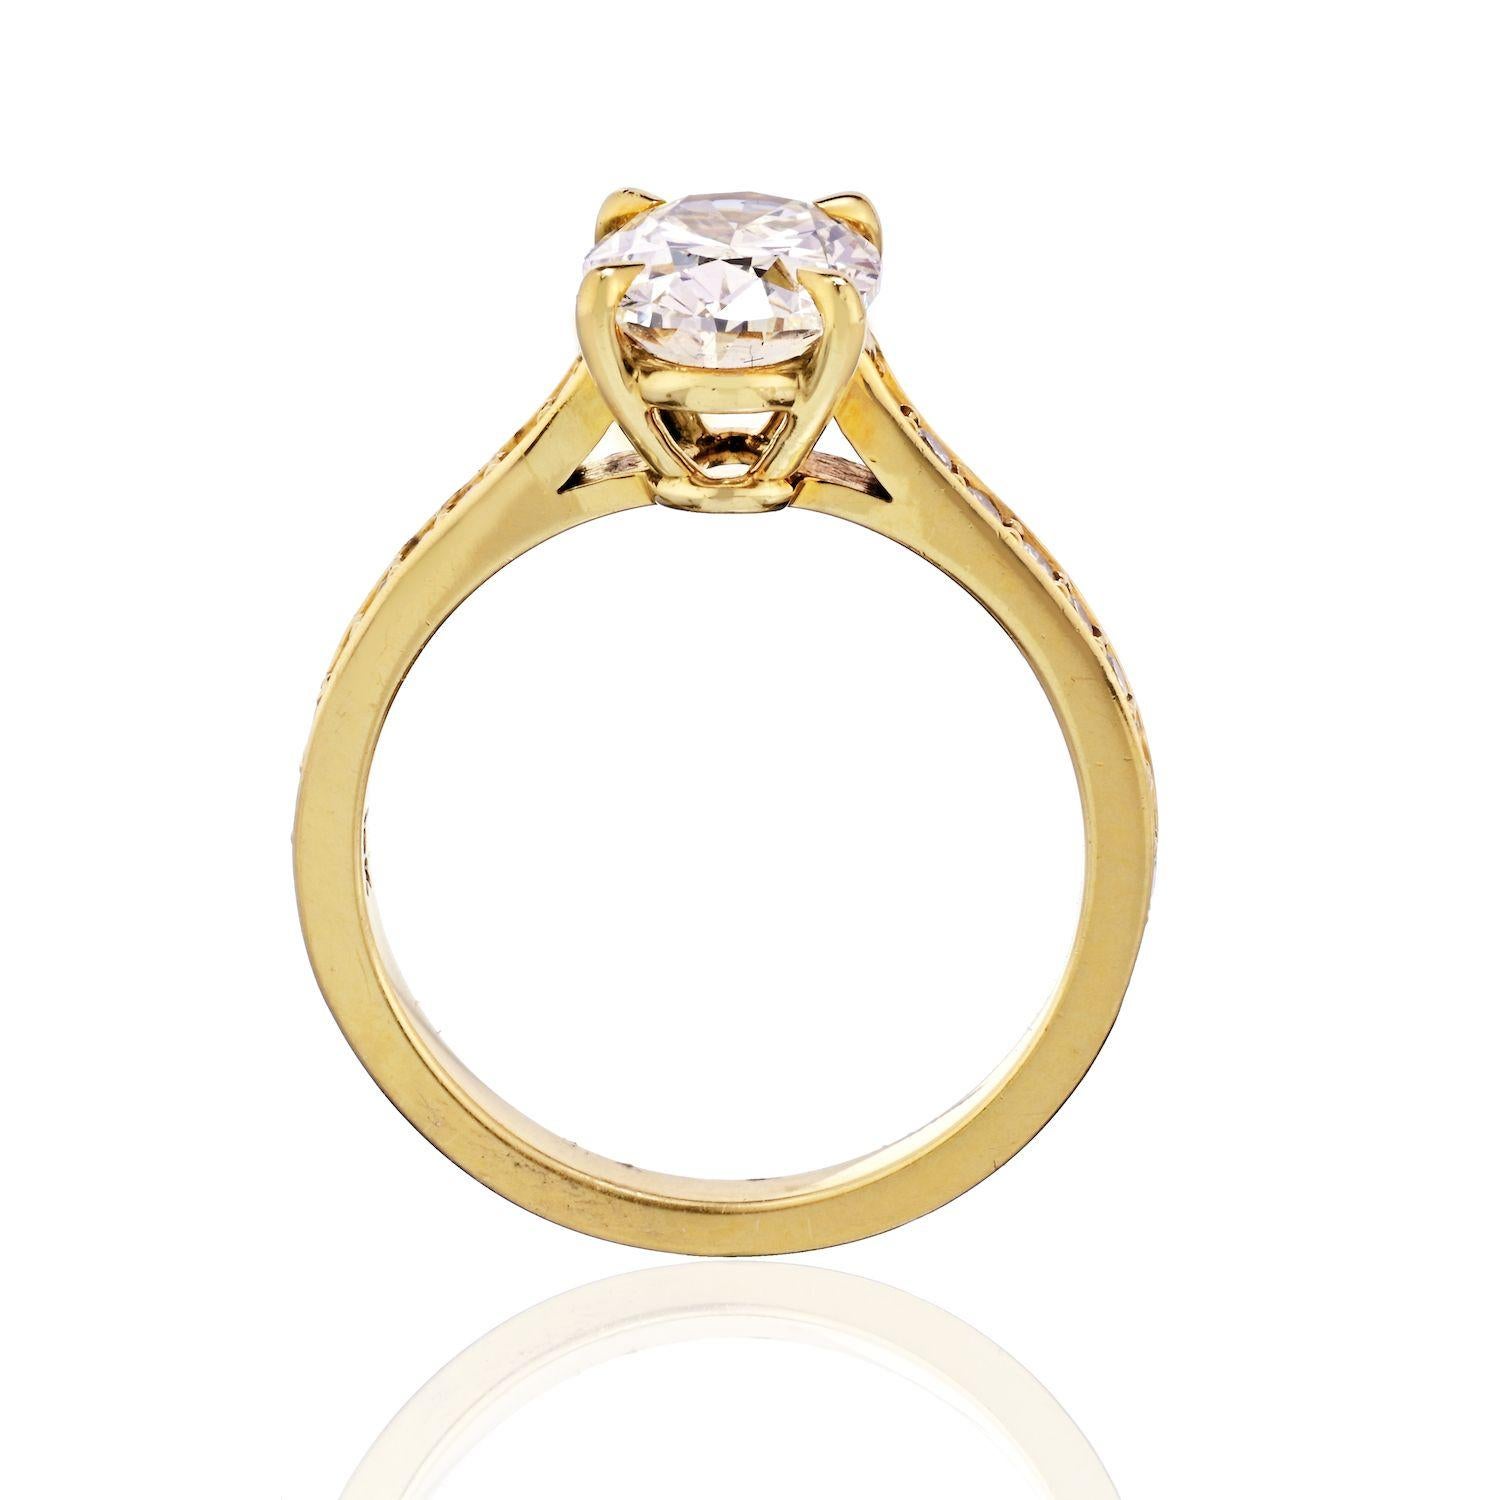 2 carat oval engagement ring on finger